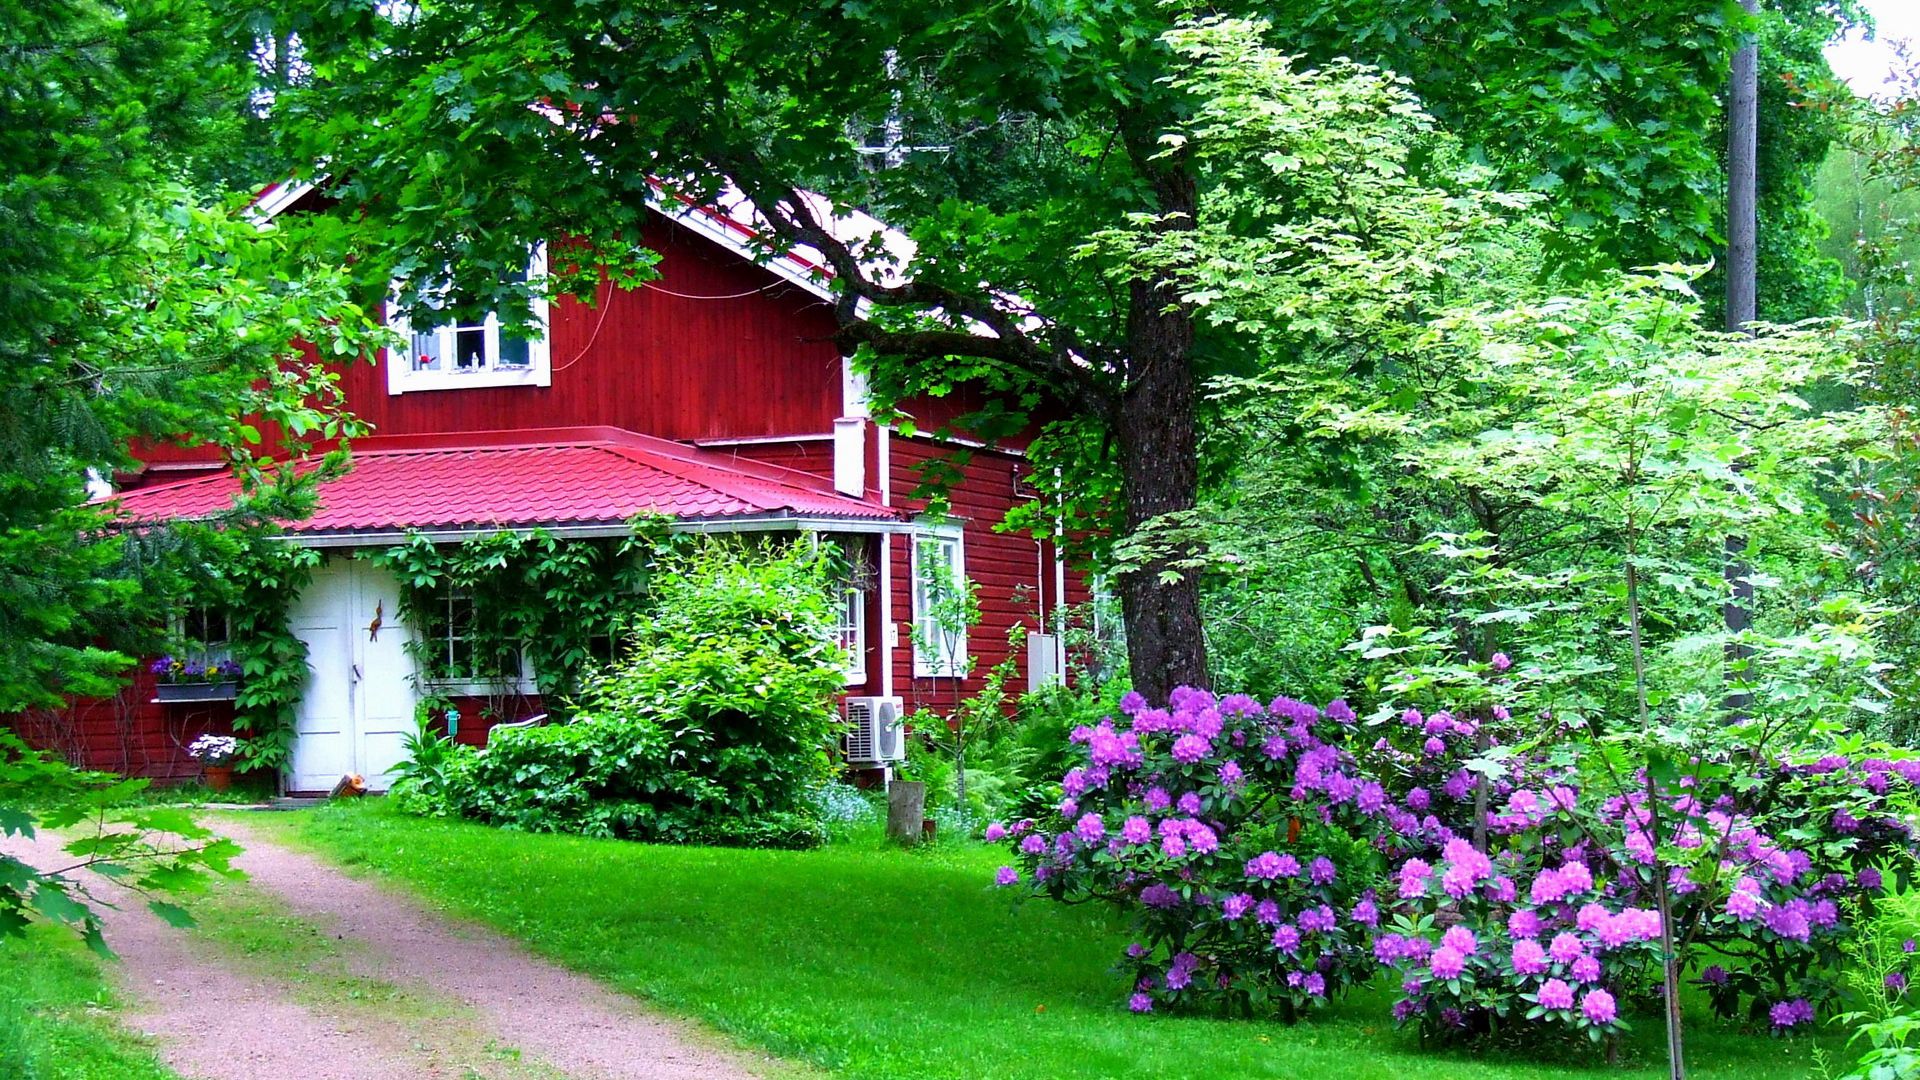 Download wallpaper 1920x1080 house, garden, yard, flowers, green, door full  hd, hdtv, fhd, 1080p hd background